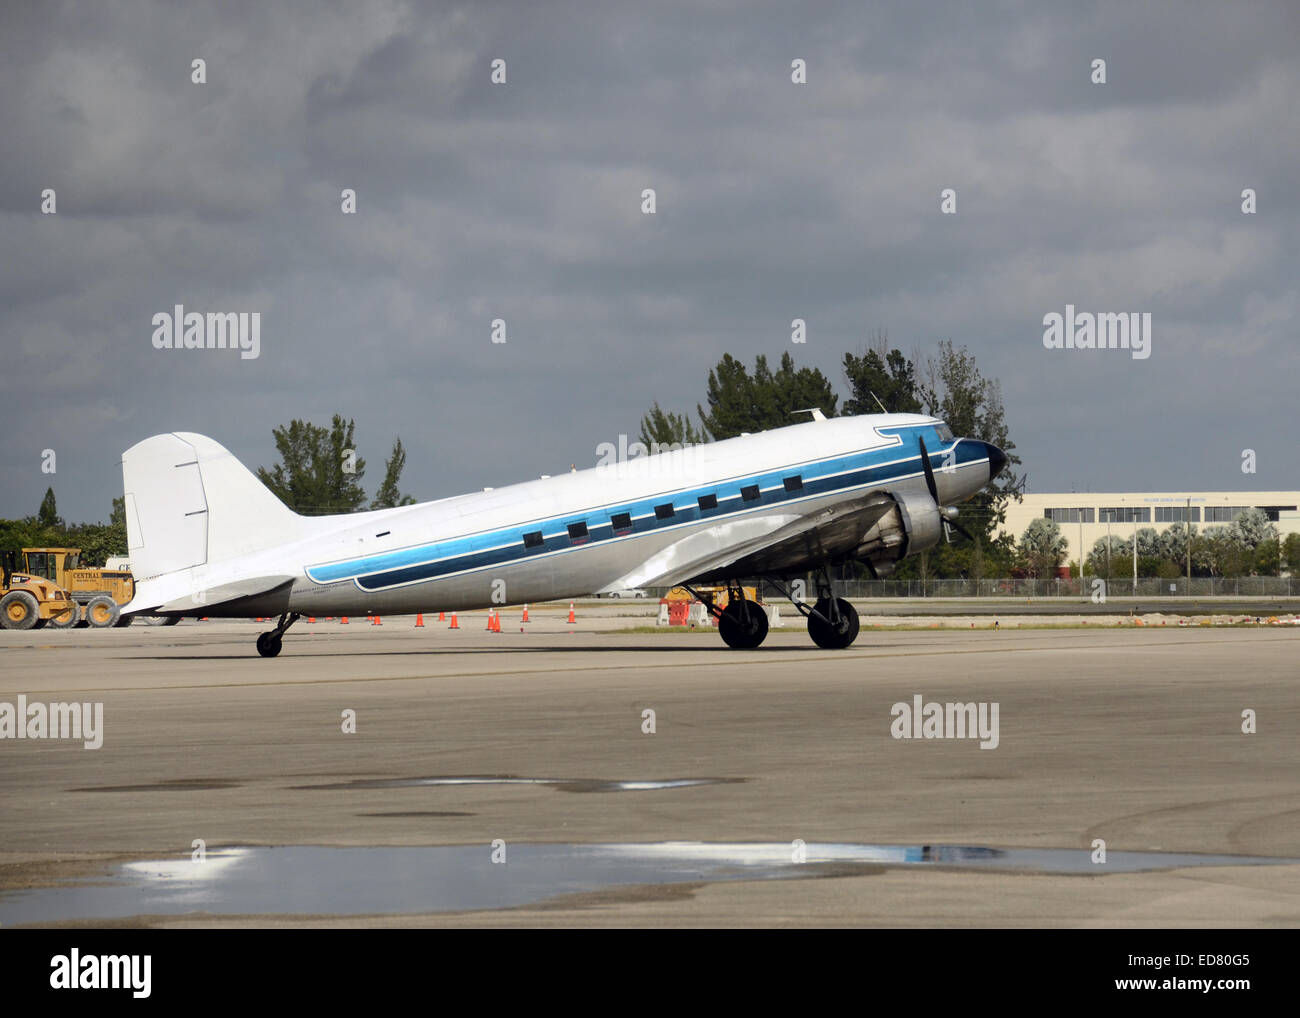 Retro DC-3 propeller airplane on the ground Stock Photo